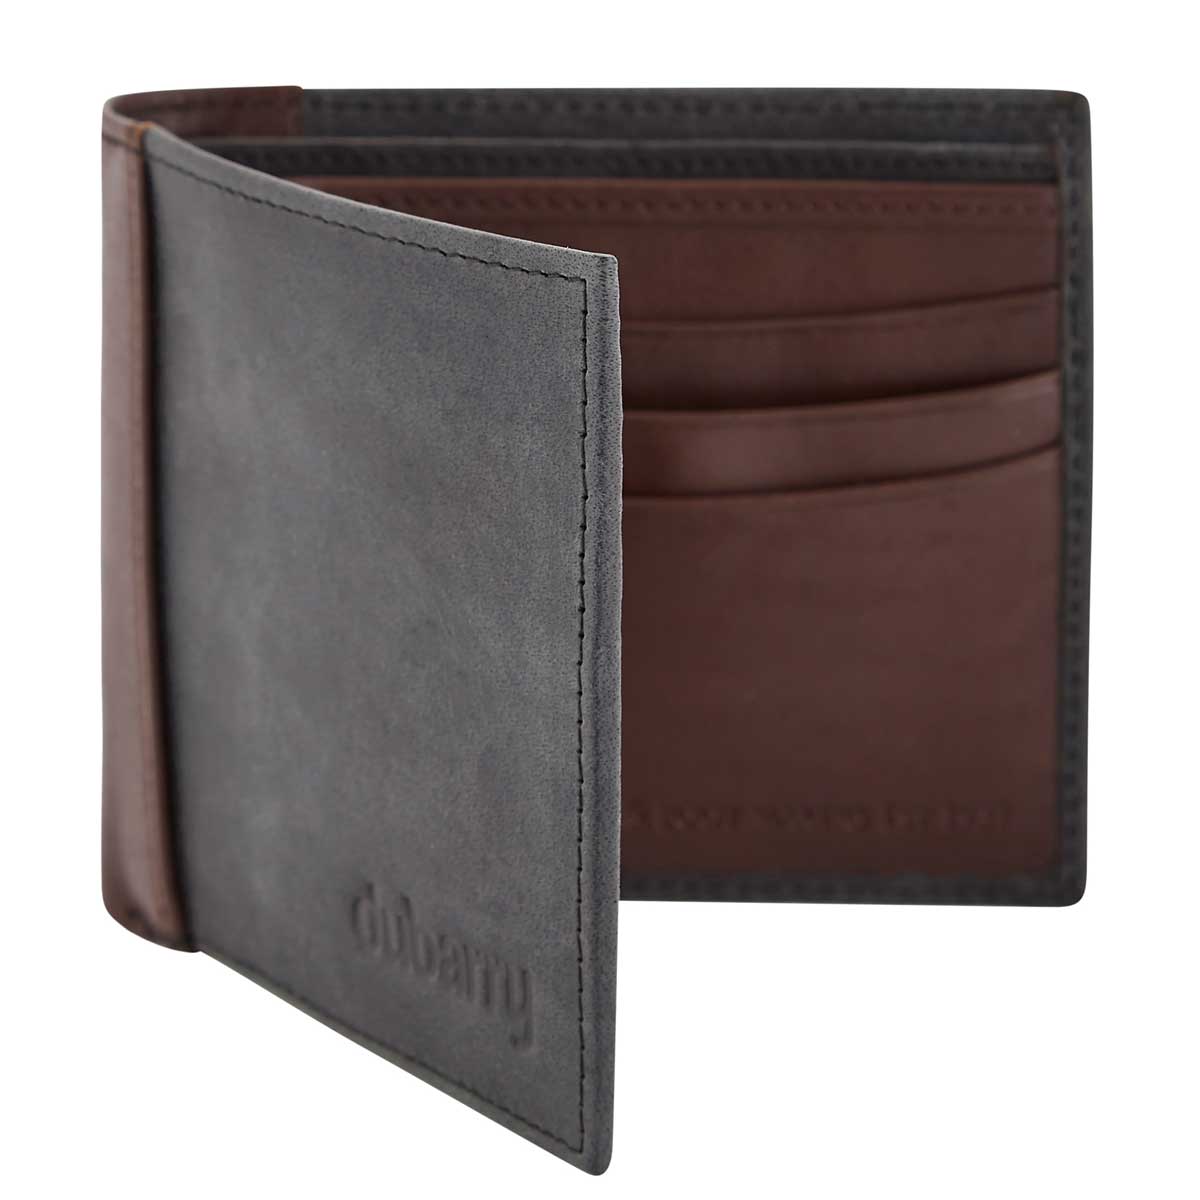 DUBARRY Rosmuc Leather Mens Wallet - Black & Brown